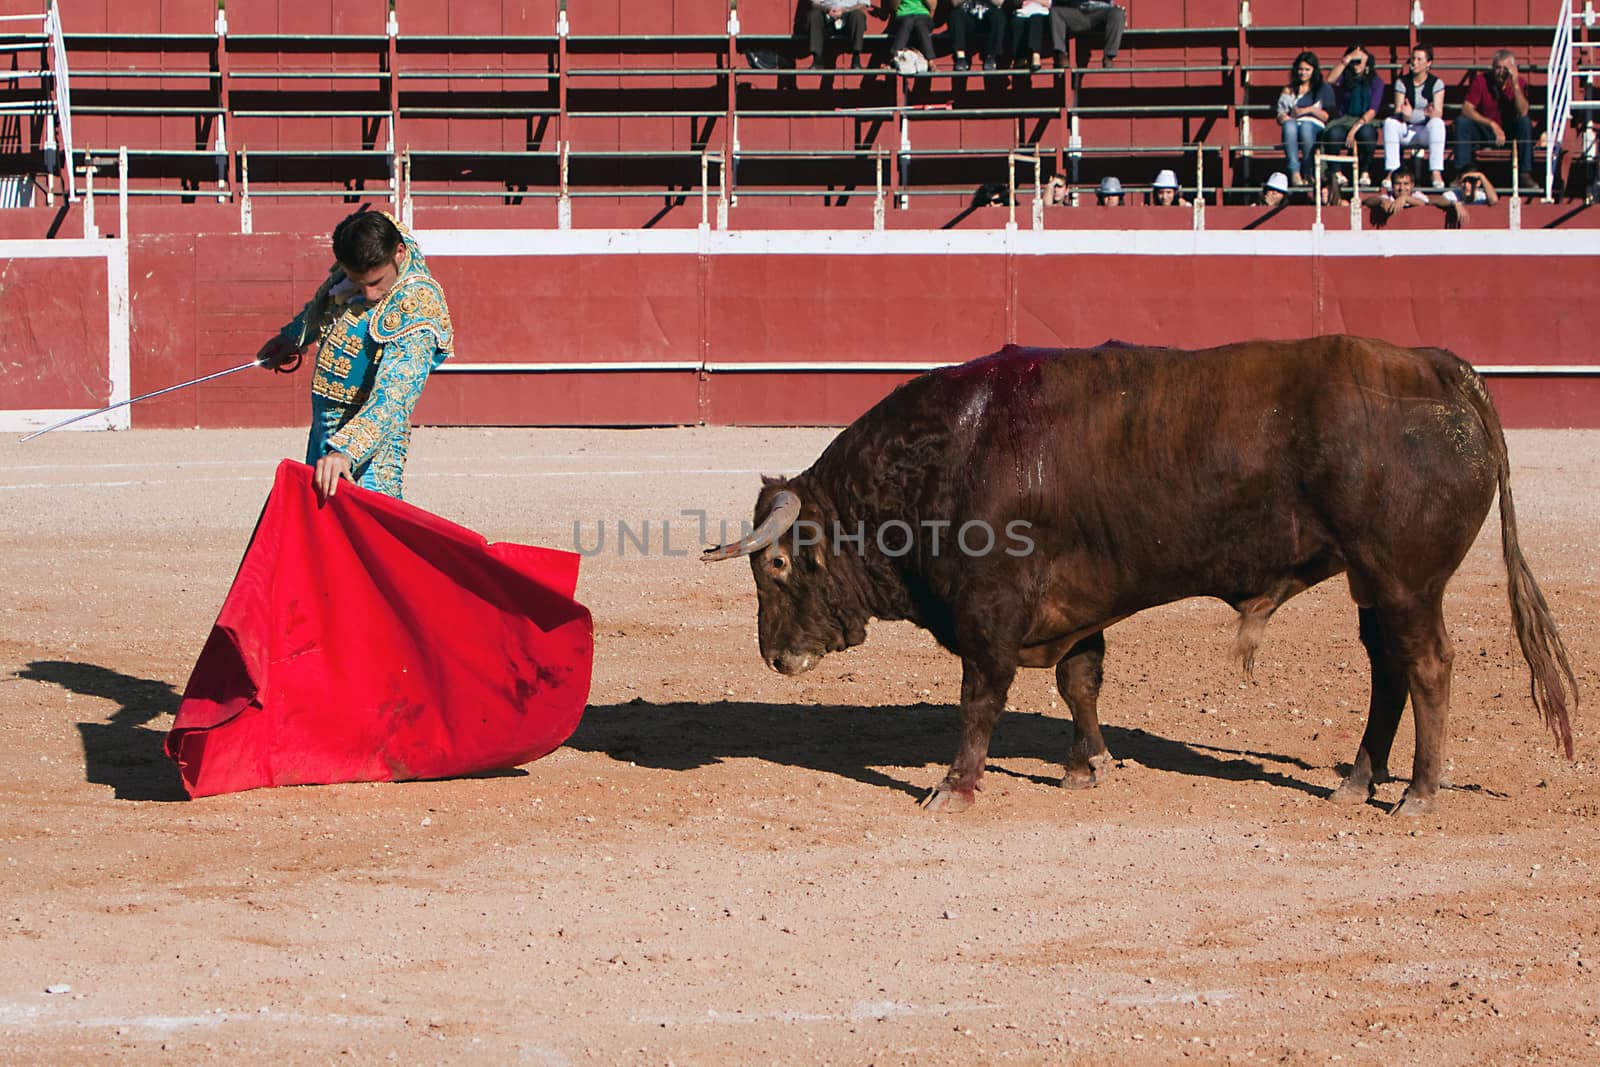 The Spanish bullfighter David Valiente by digicomphoto